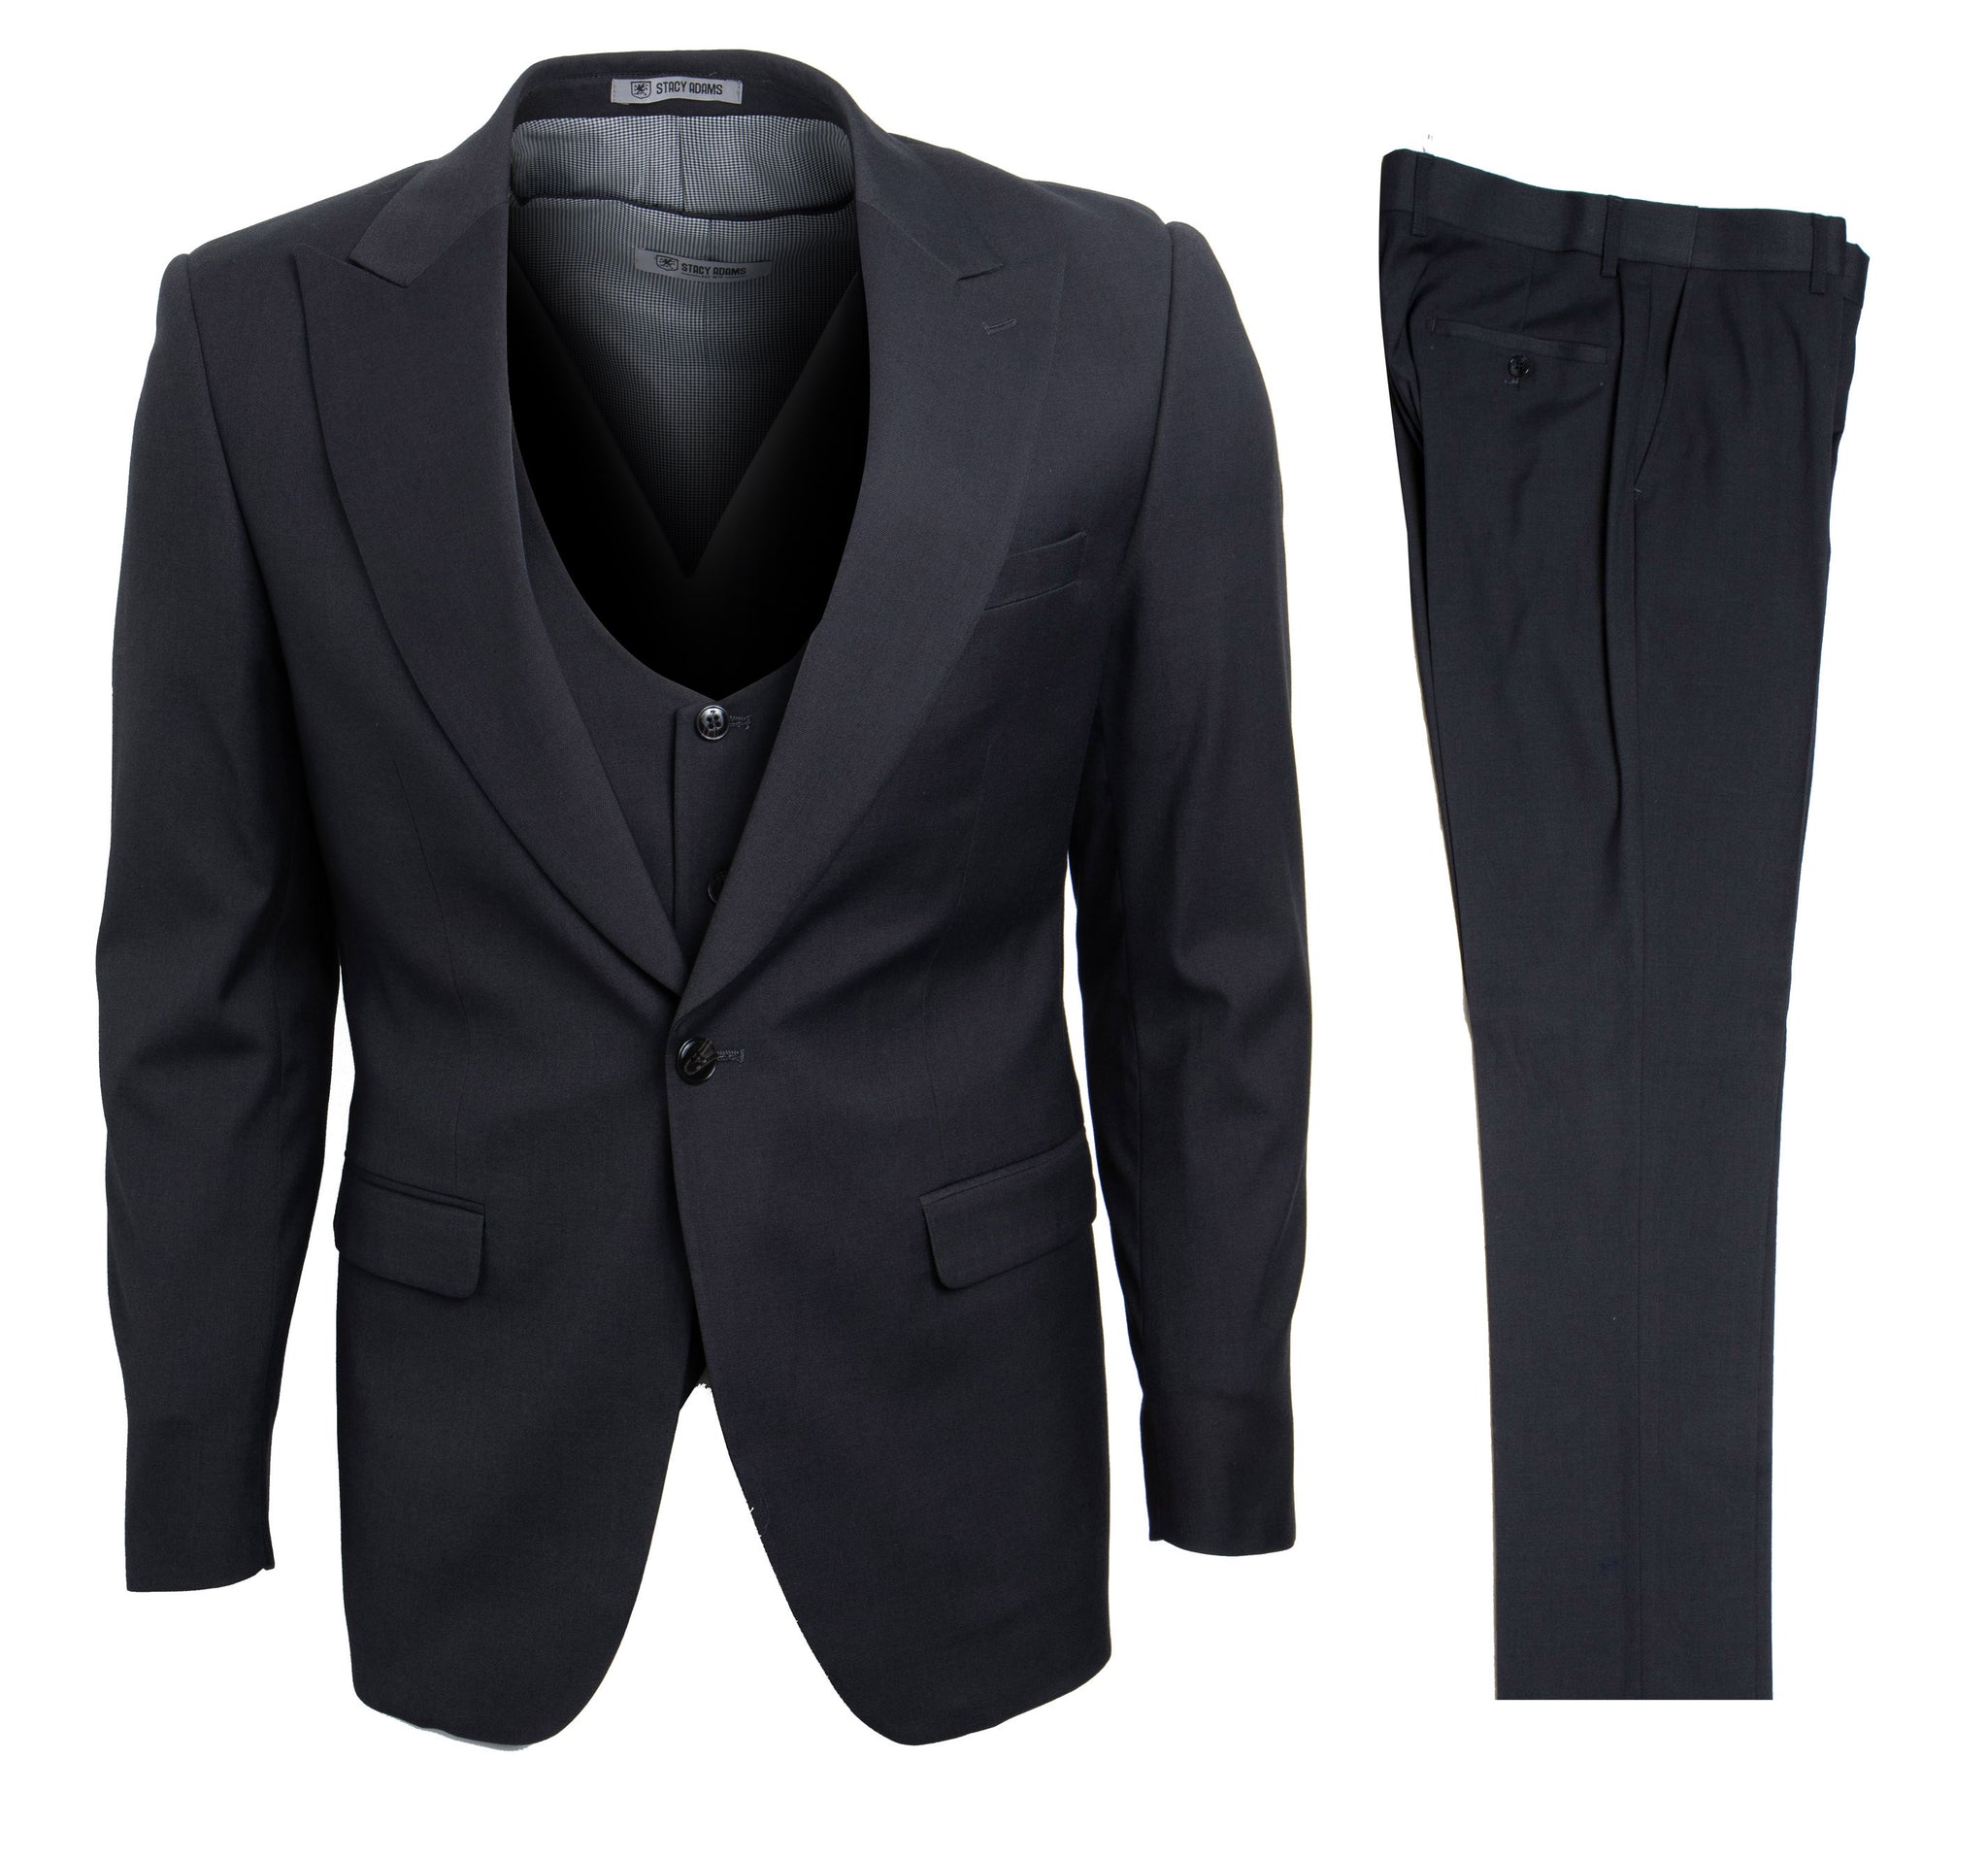 D&K Menswear exclusive Charcoal Stacy Adams Suit